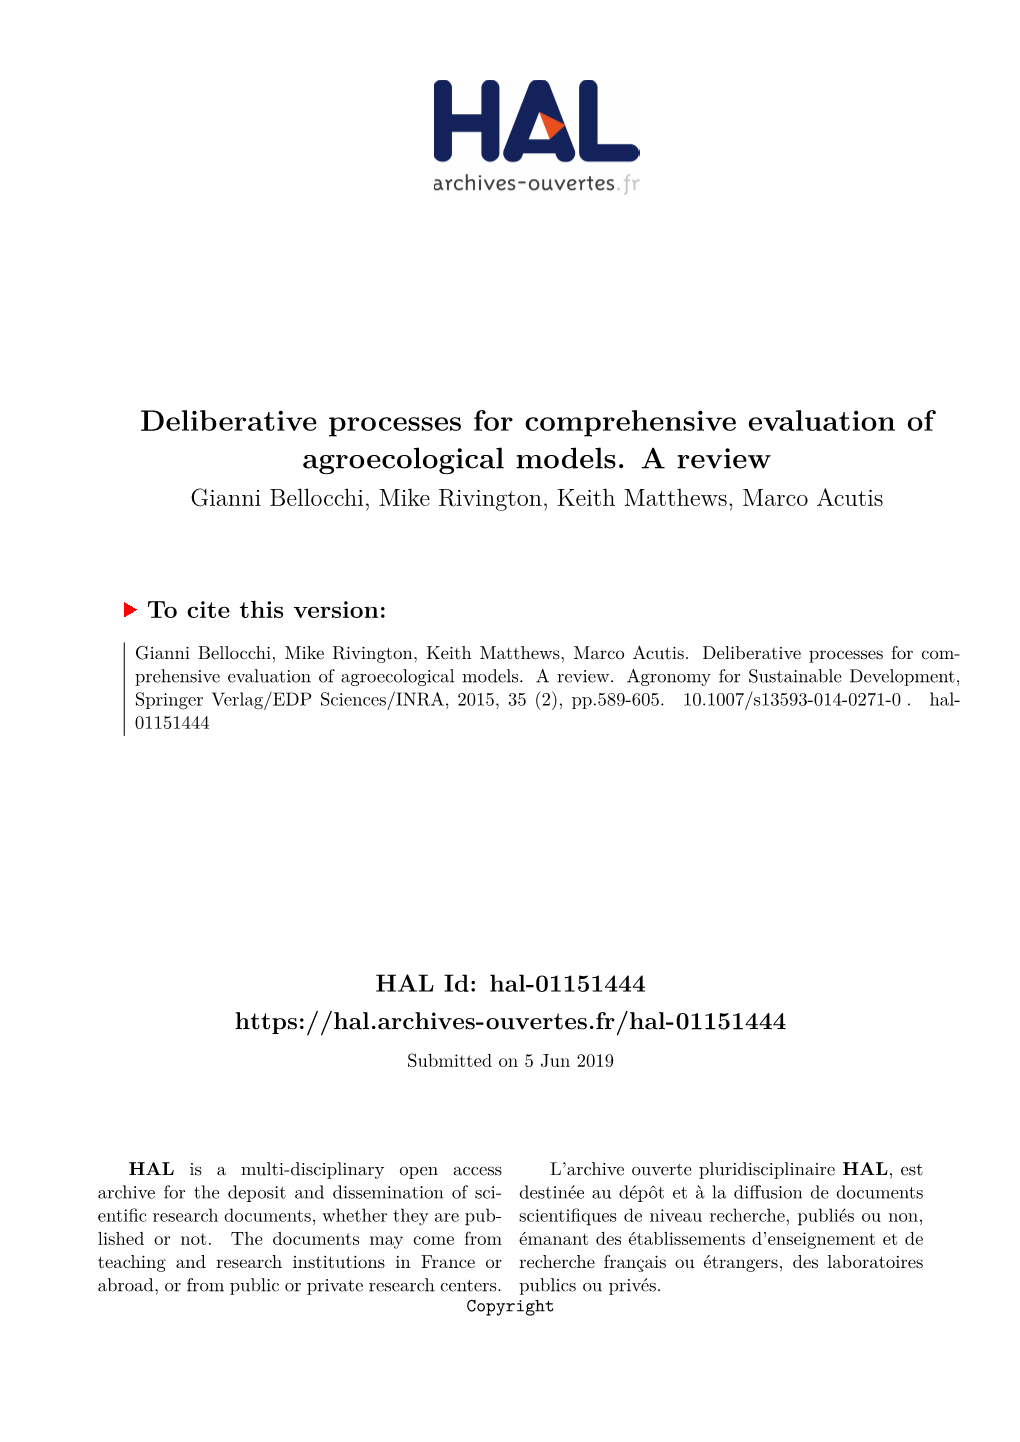 Deliberative Processes for Comprehensive Evaluation of Agroecological Models